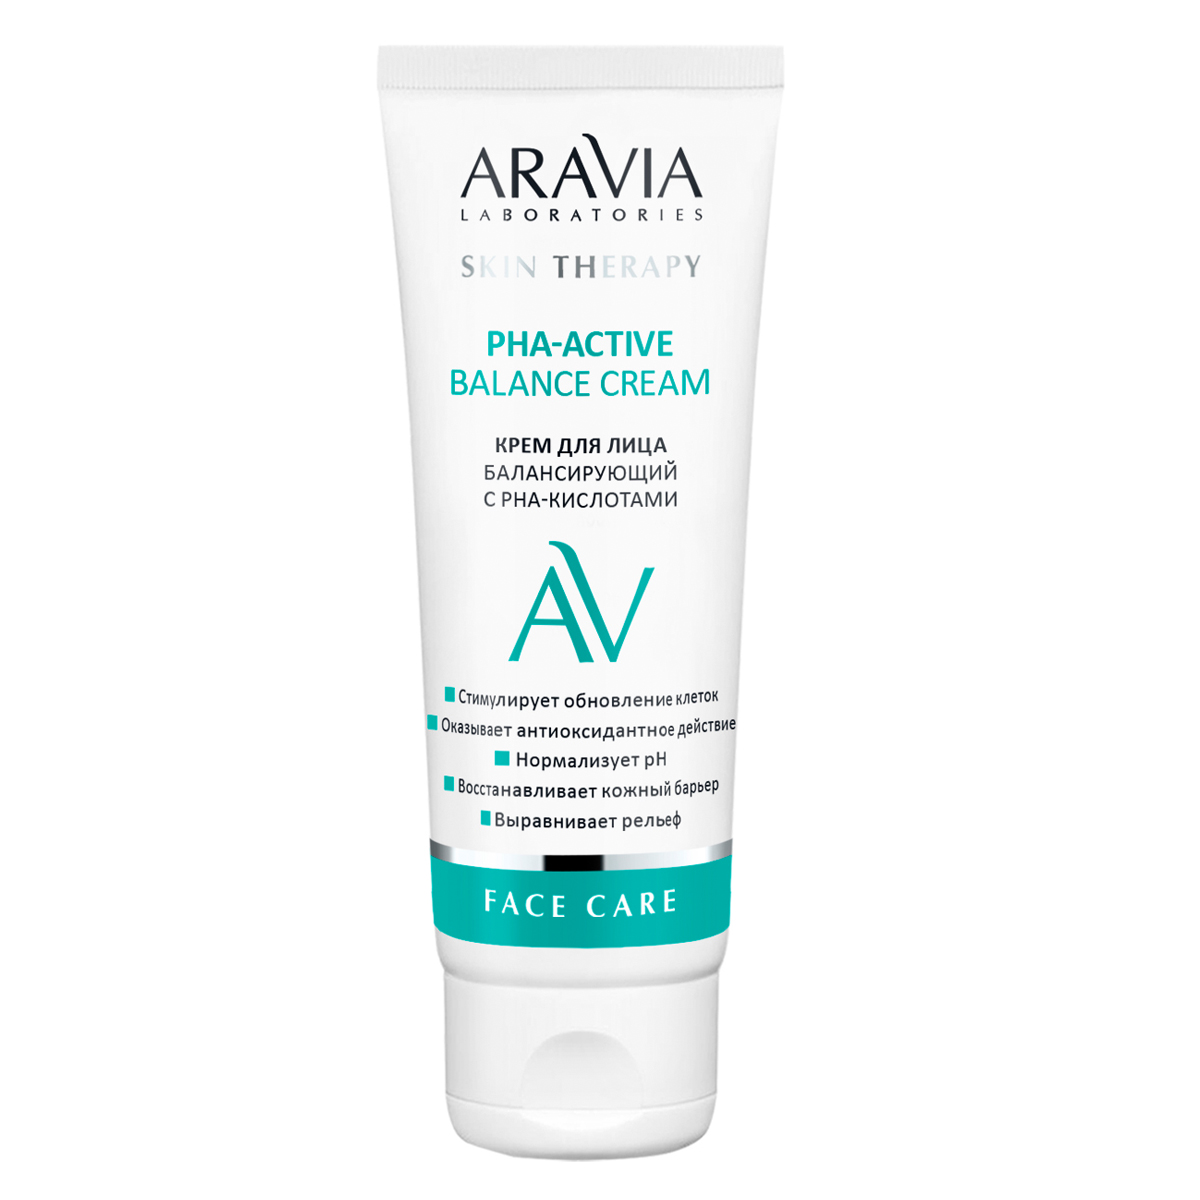 Aravia Laboratories Крем для лица, балансирующий с PHA-кислотами PHA-Active Balance Cream, 50 мл (Aravia Laboratories, Уход за лицом)